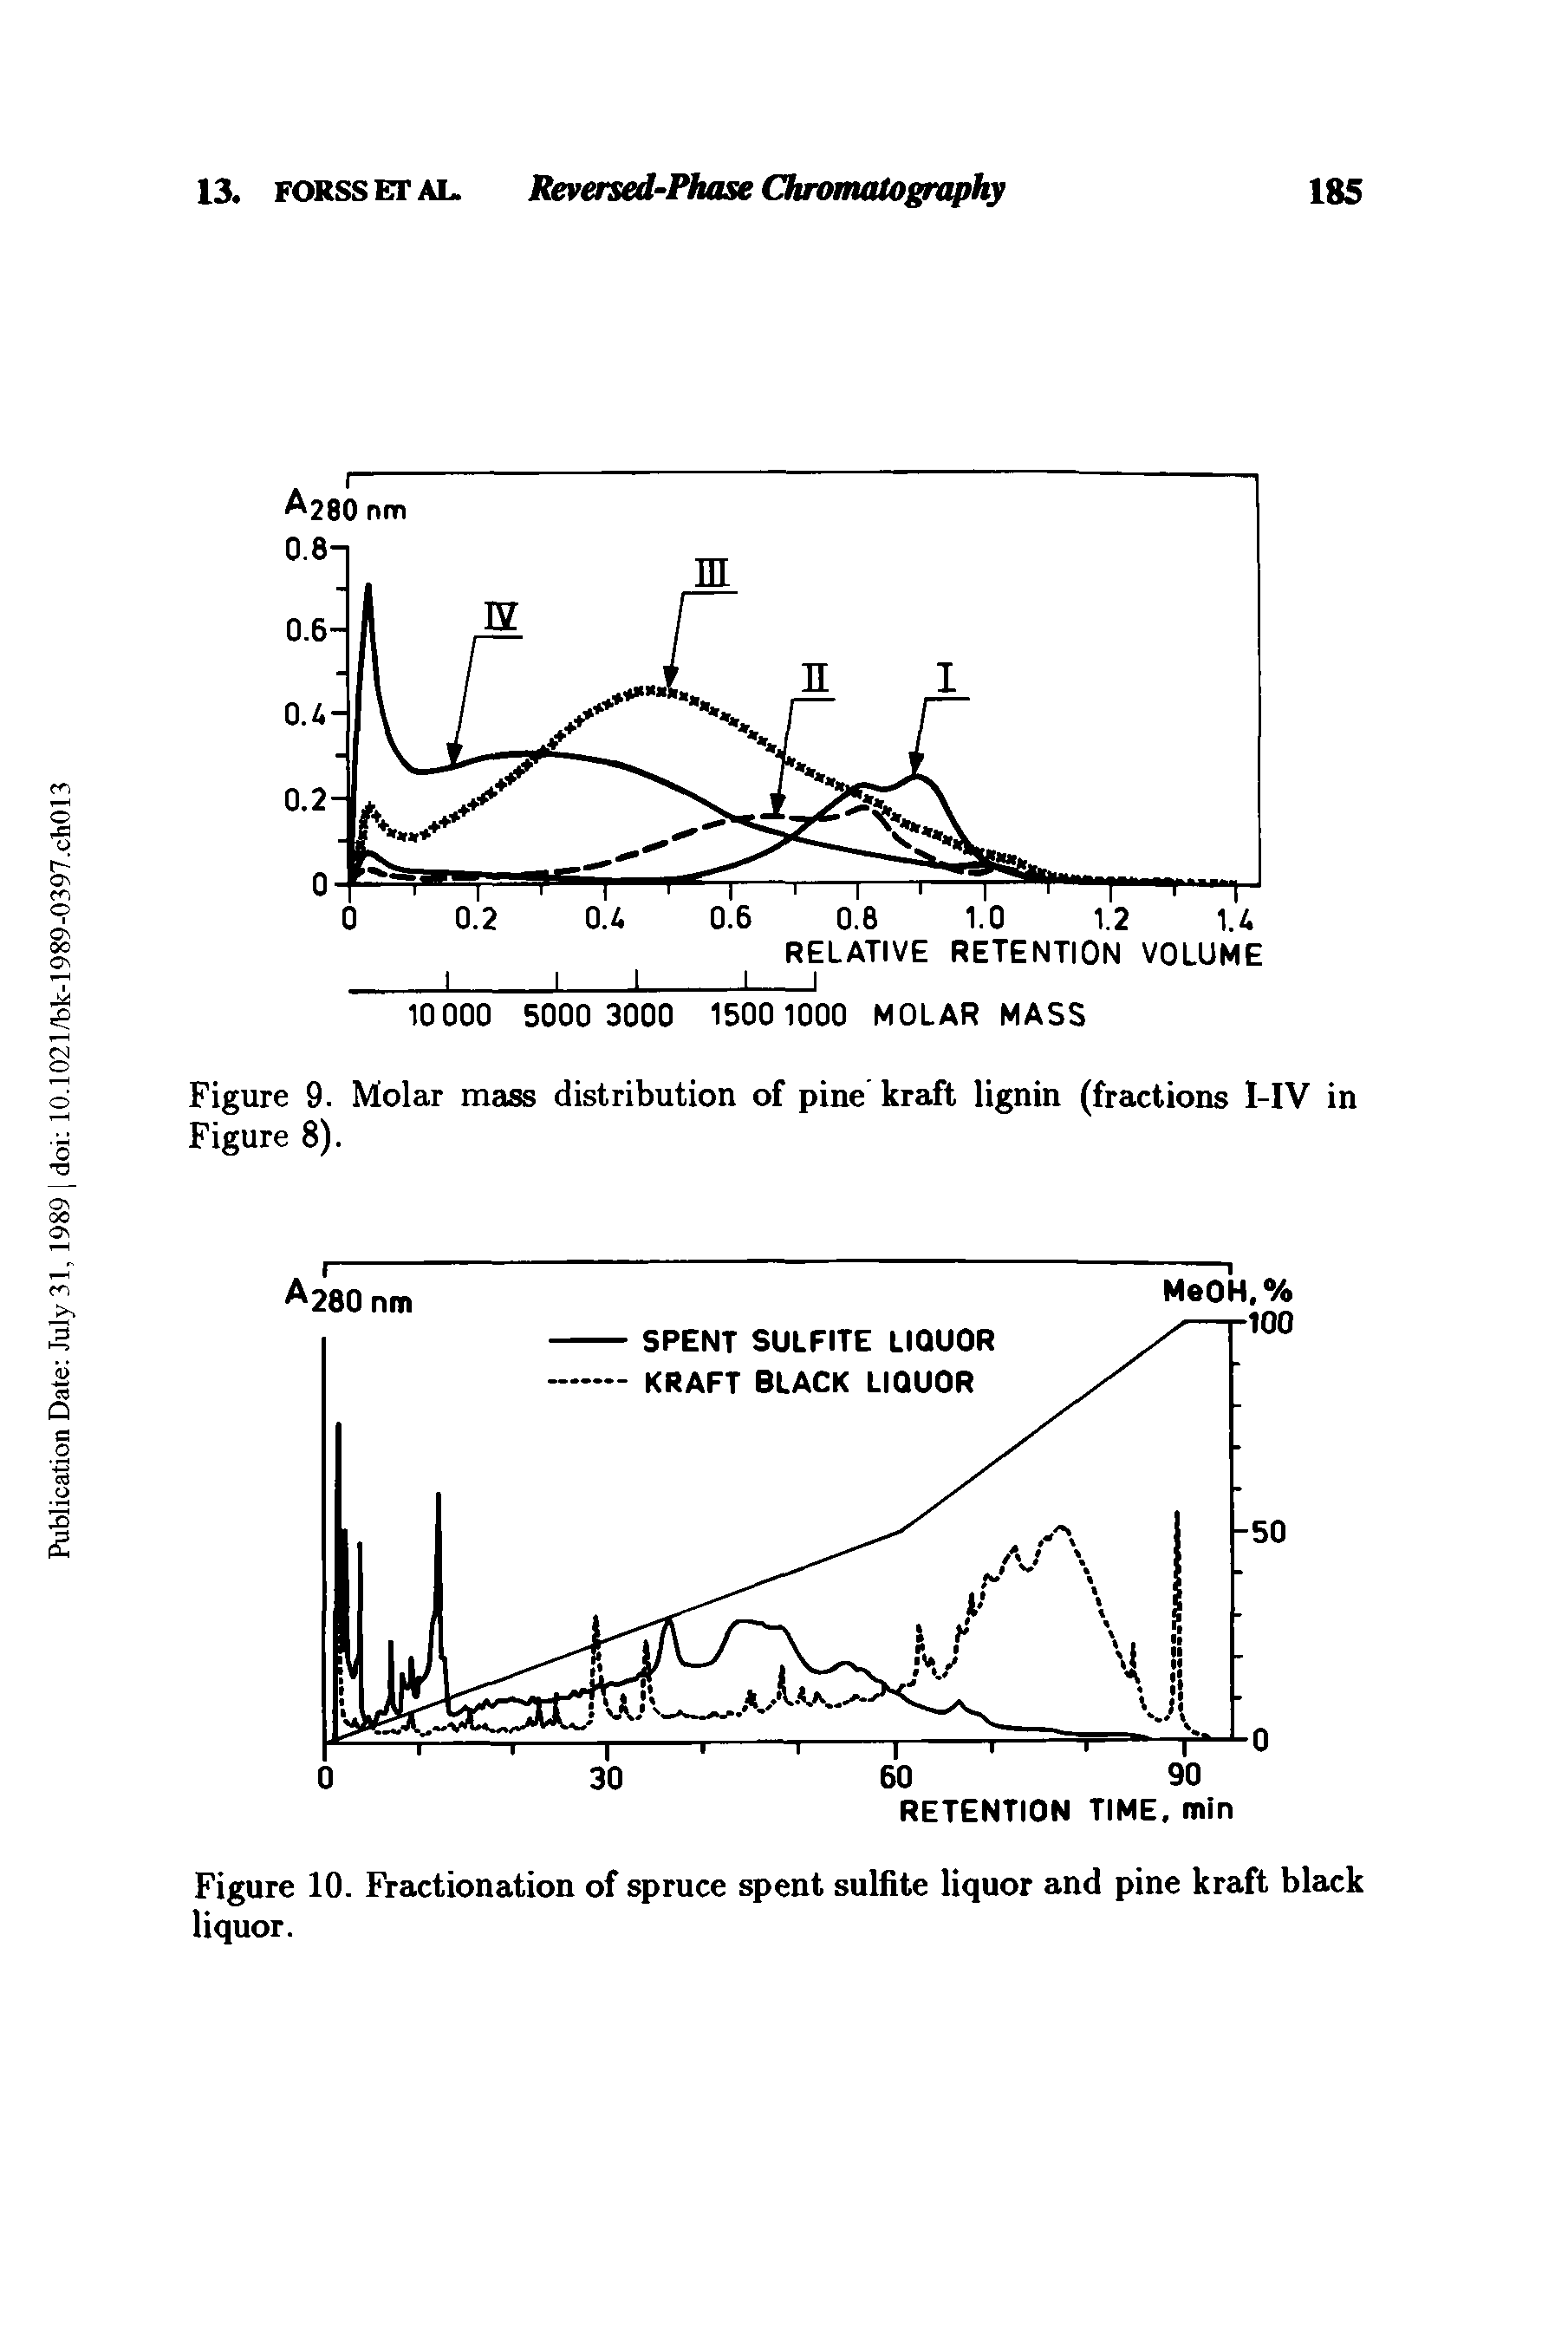 Figure 10. Fractionation of spruce spent sulfite liquor and pine kraft black liquor.